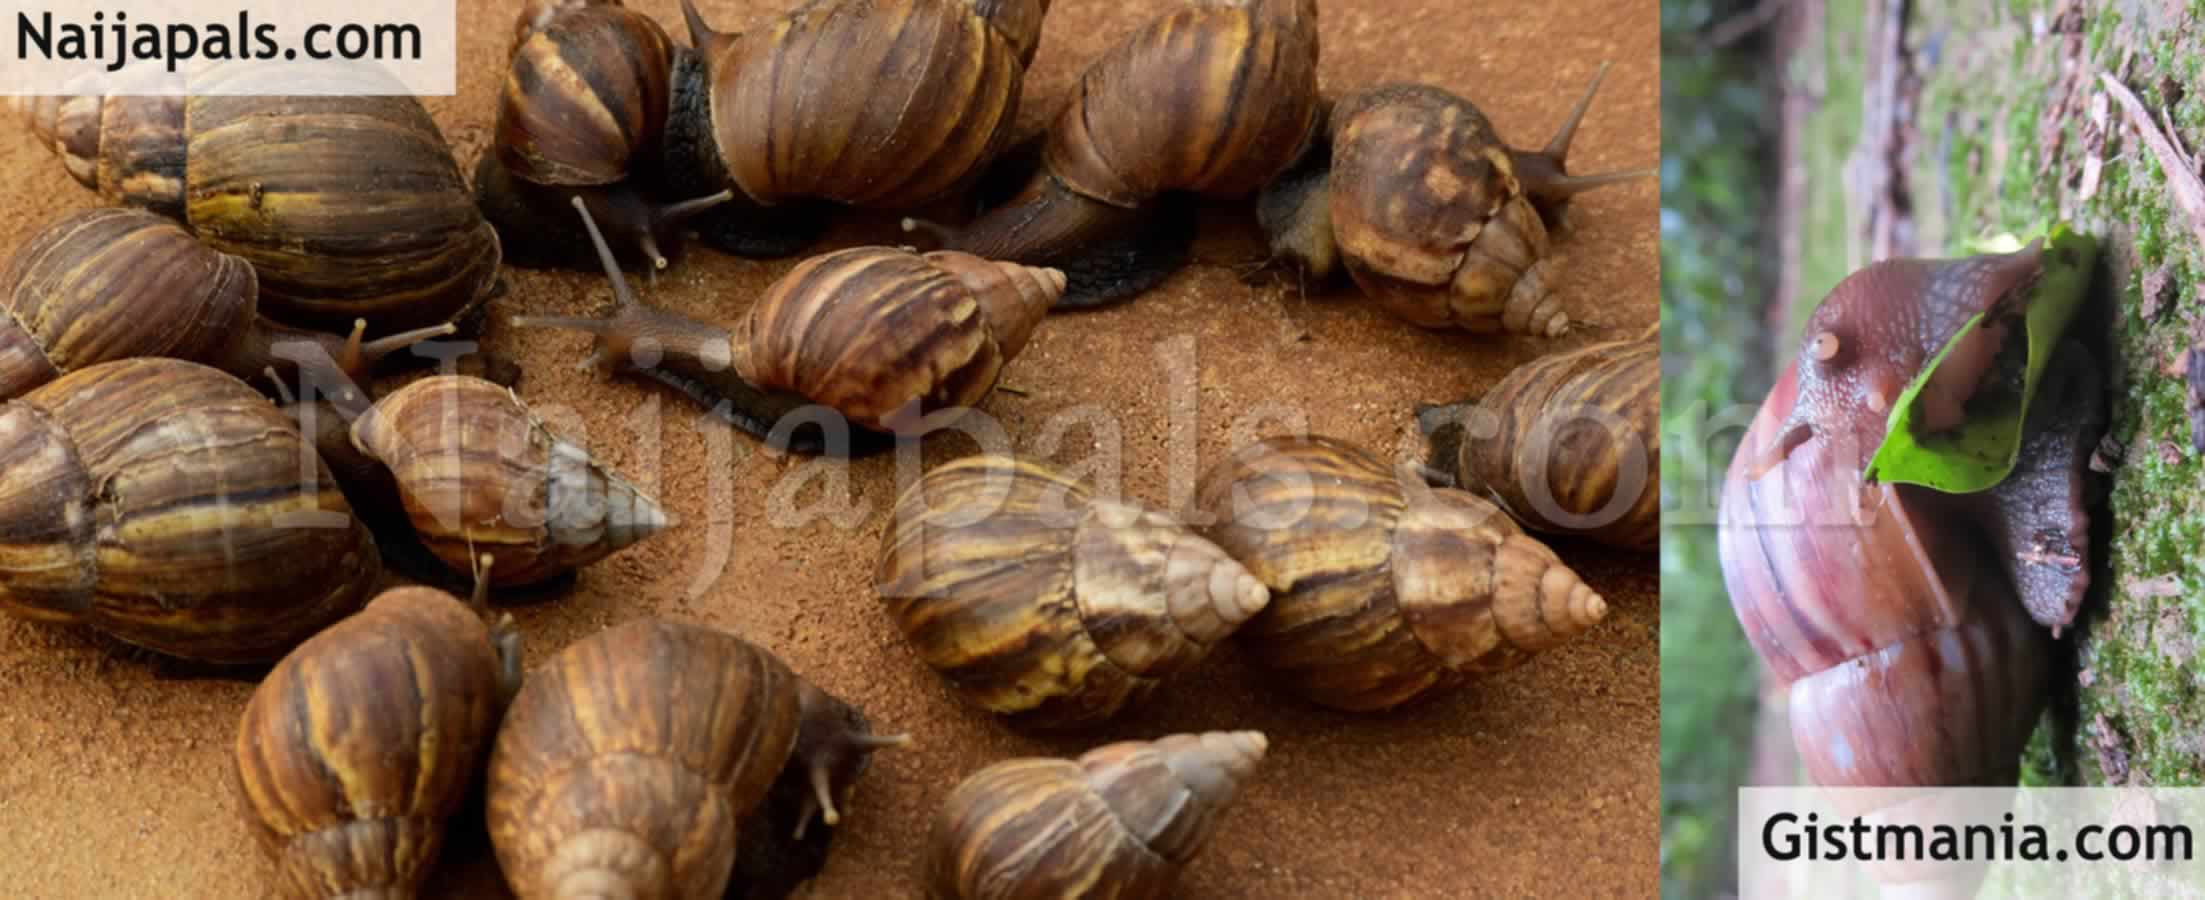 Wow 15 Giant Snails From Nigeria Capable Of Causing Meningitis Seized